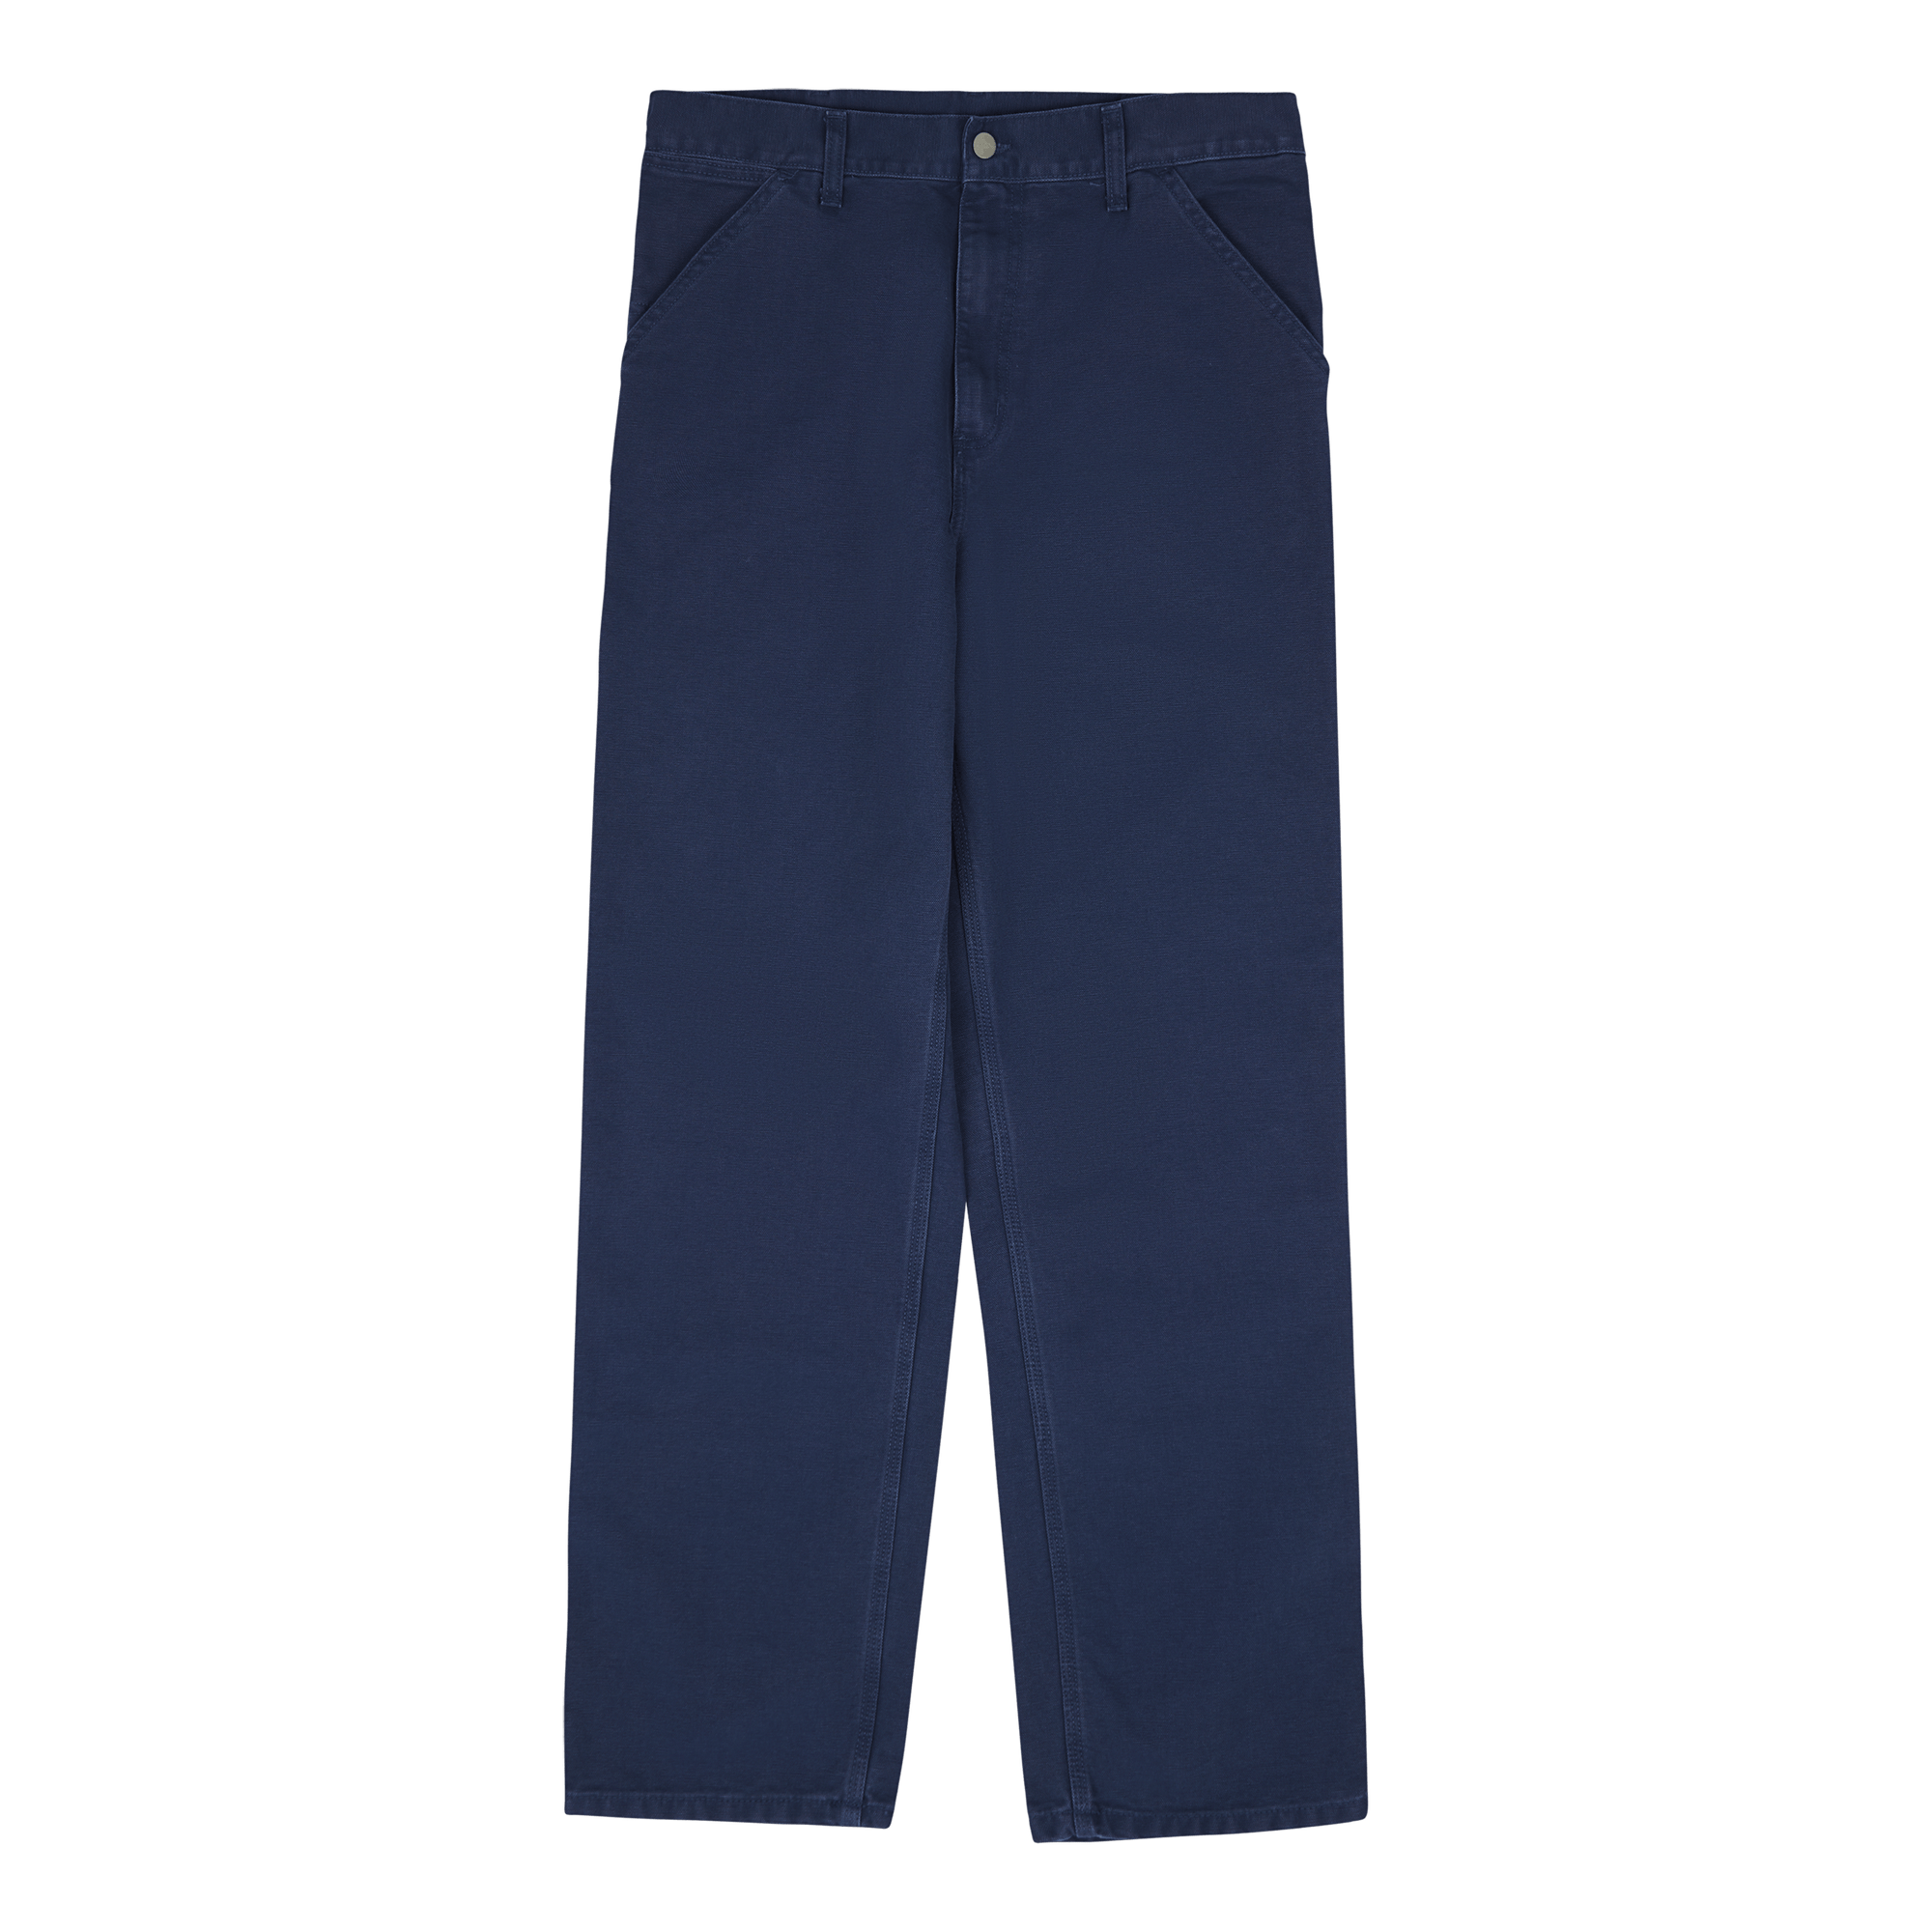 Quartersnacks Simple Pant Blue